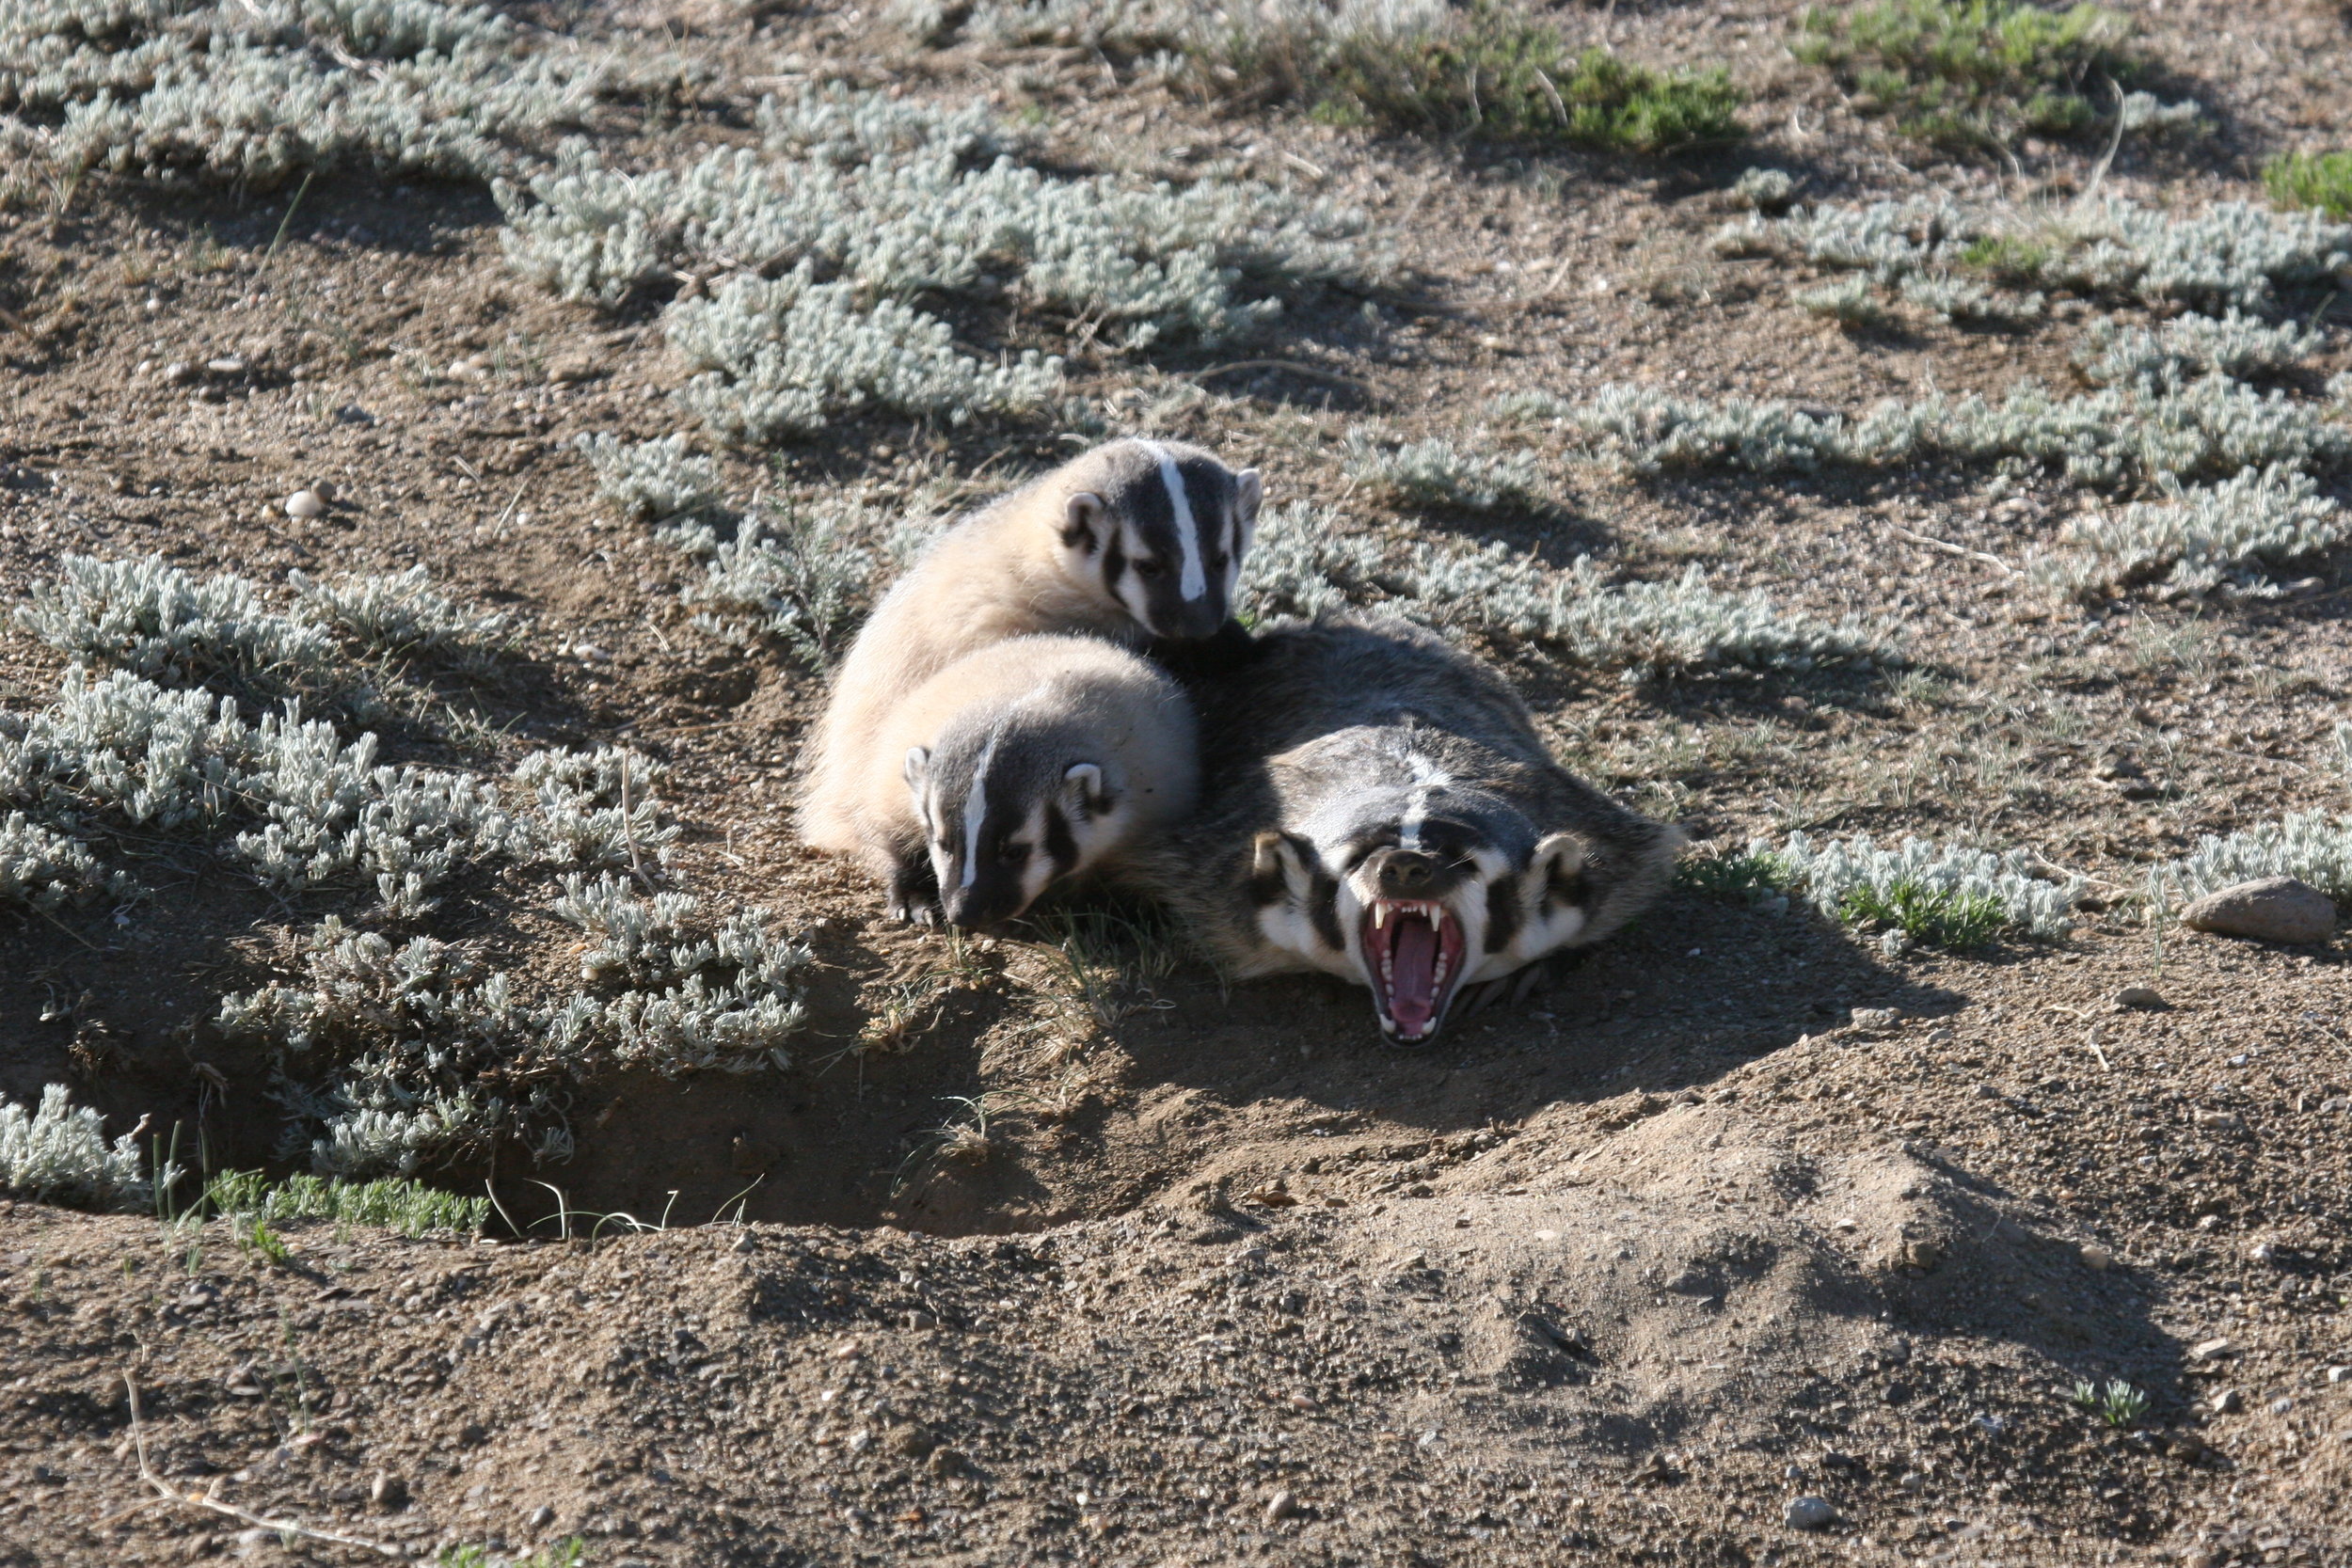  A yawn puts this badger's crushing teeth on display.  ©John Hoogland 2012  